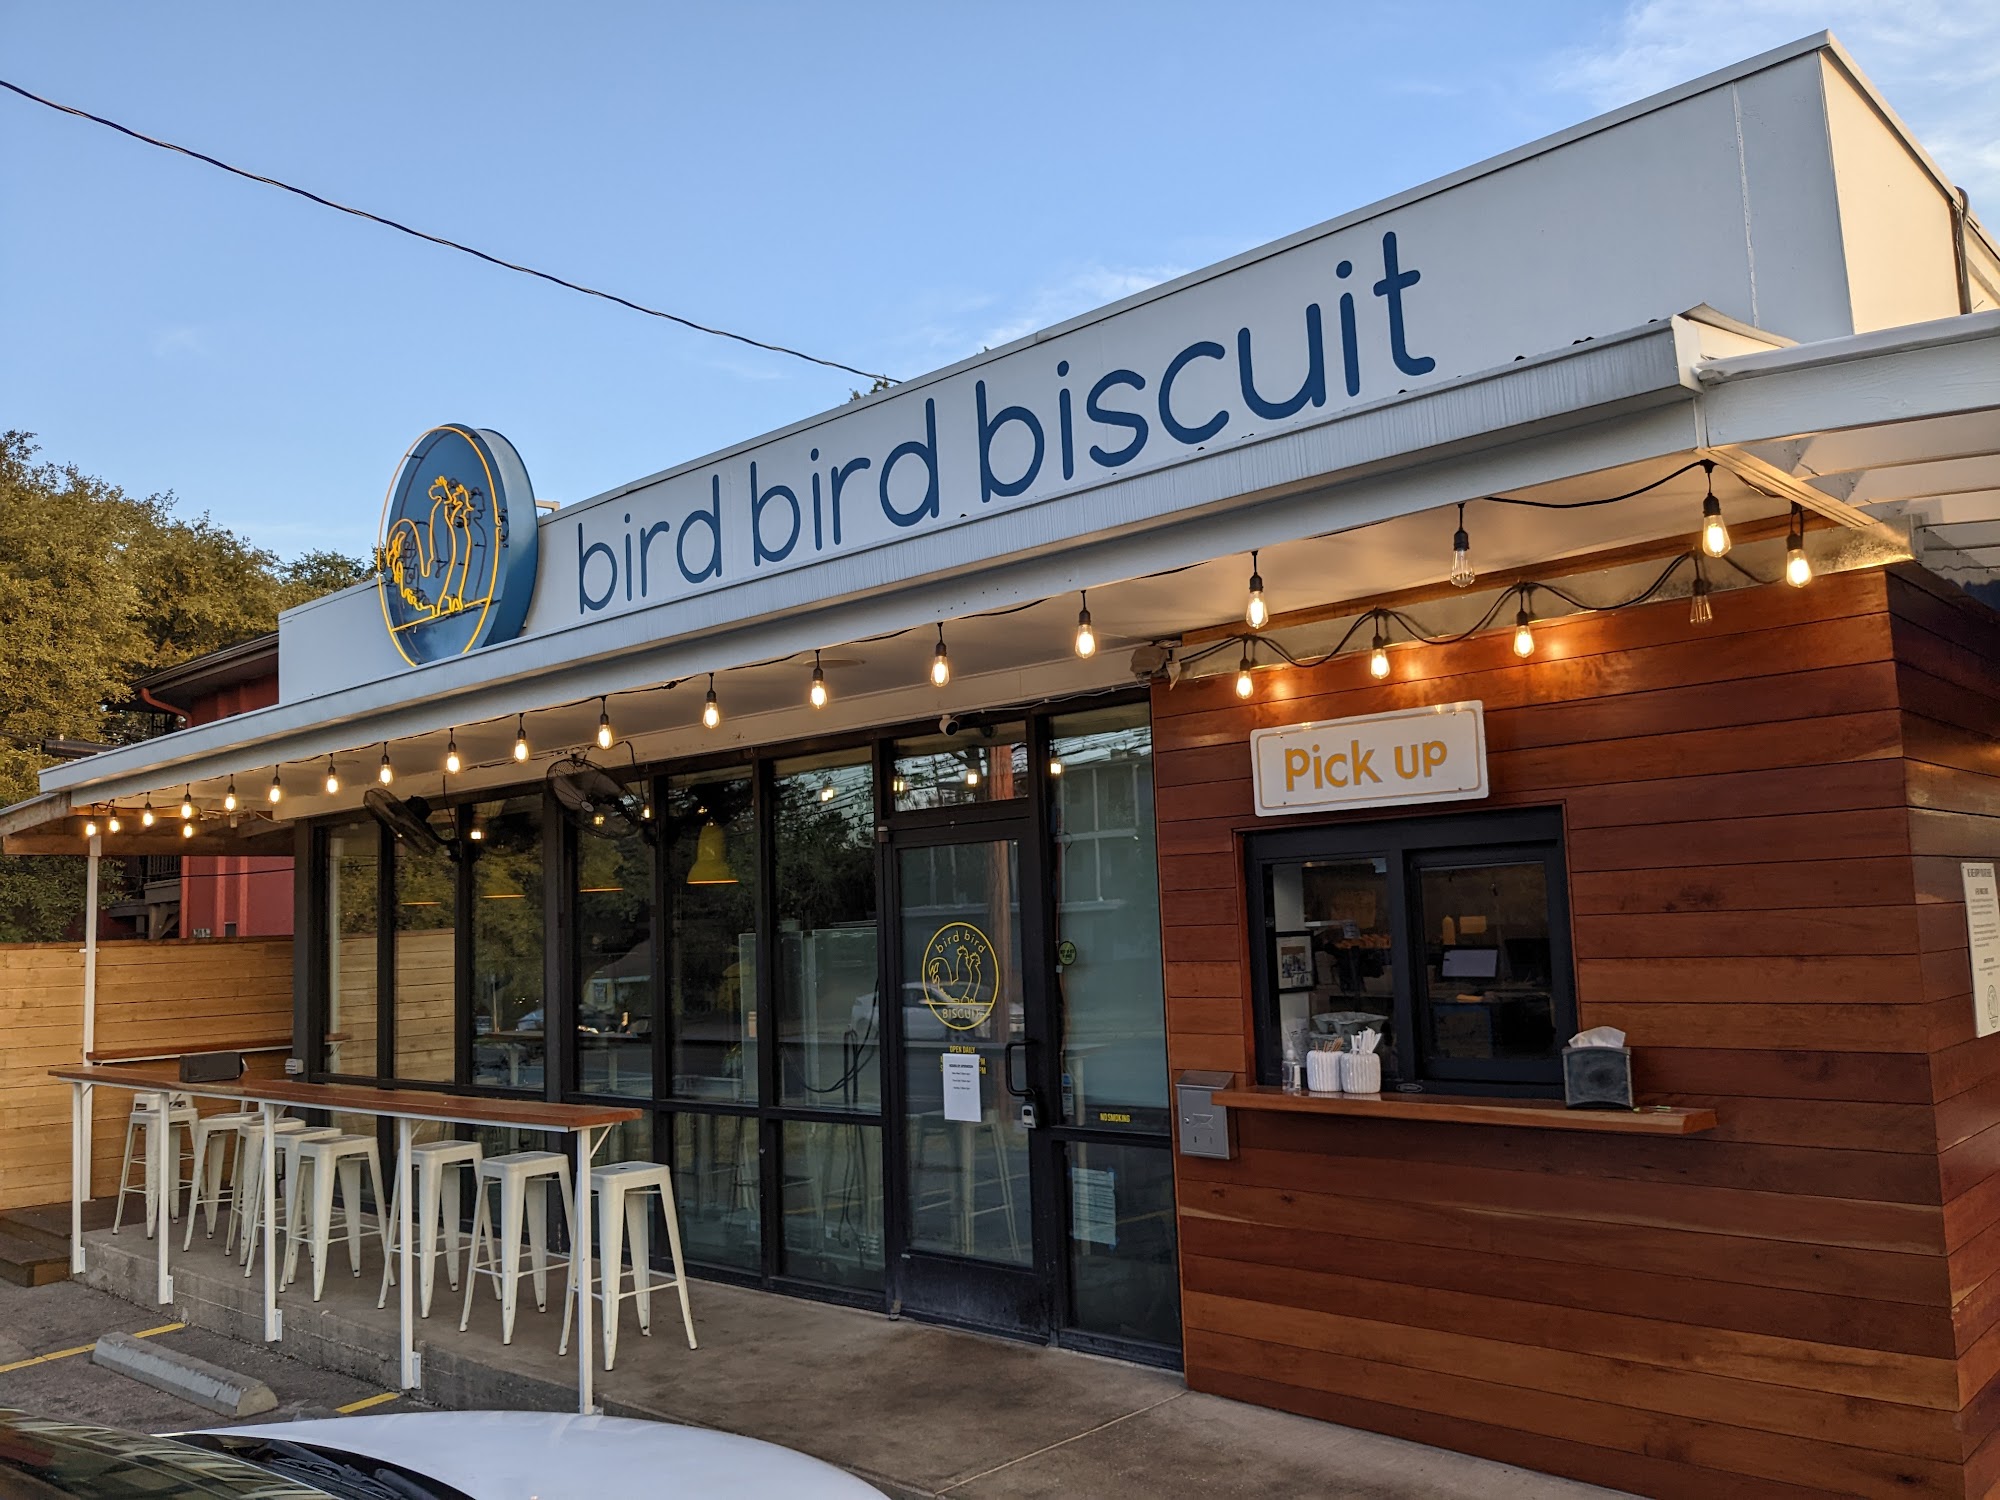 Bird Bird Biscuit